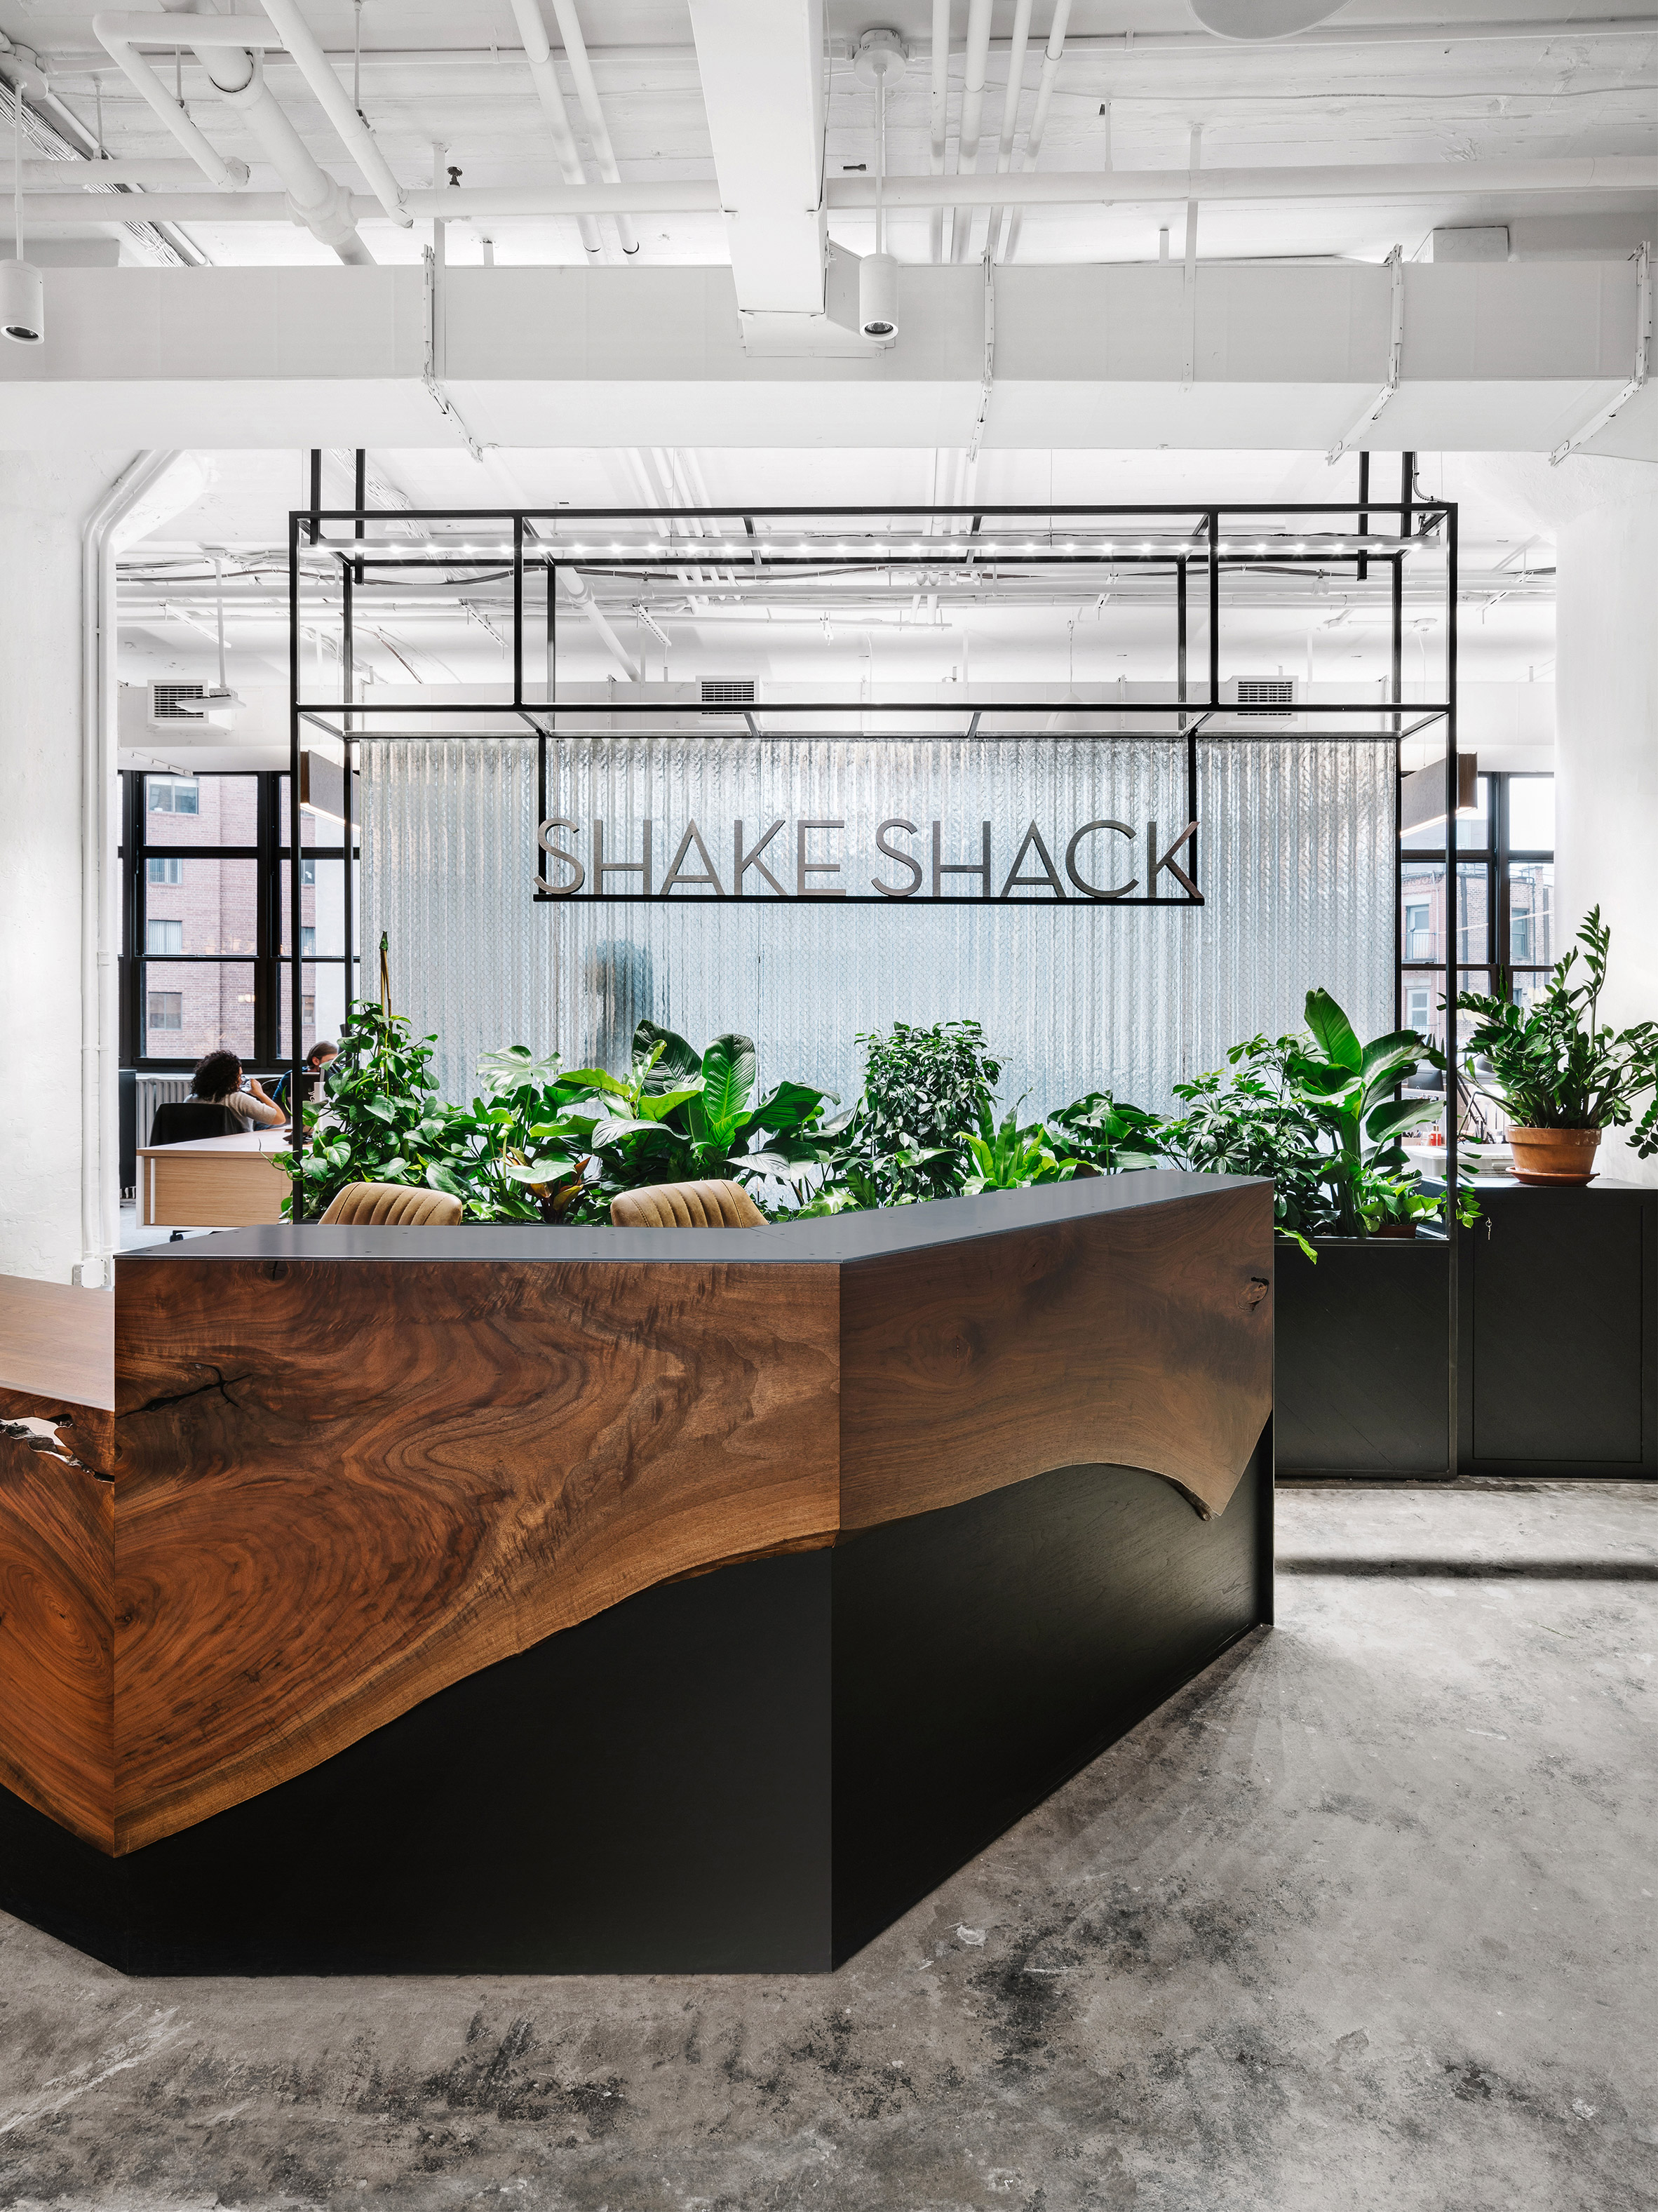 Shake Shack Headquarters by Michael Hsu